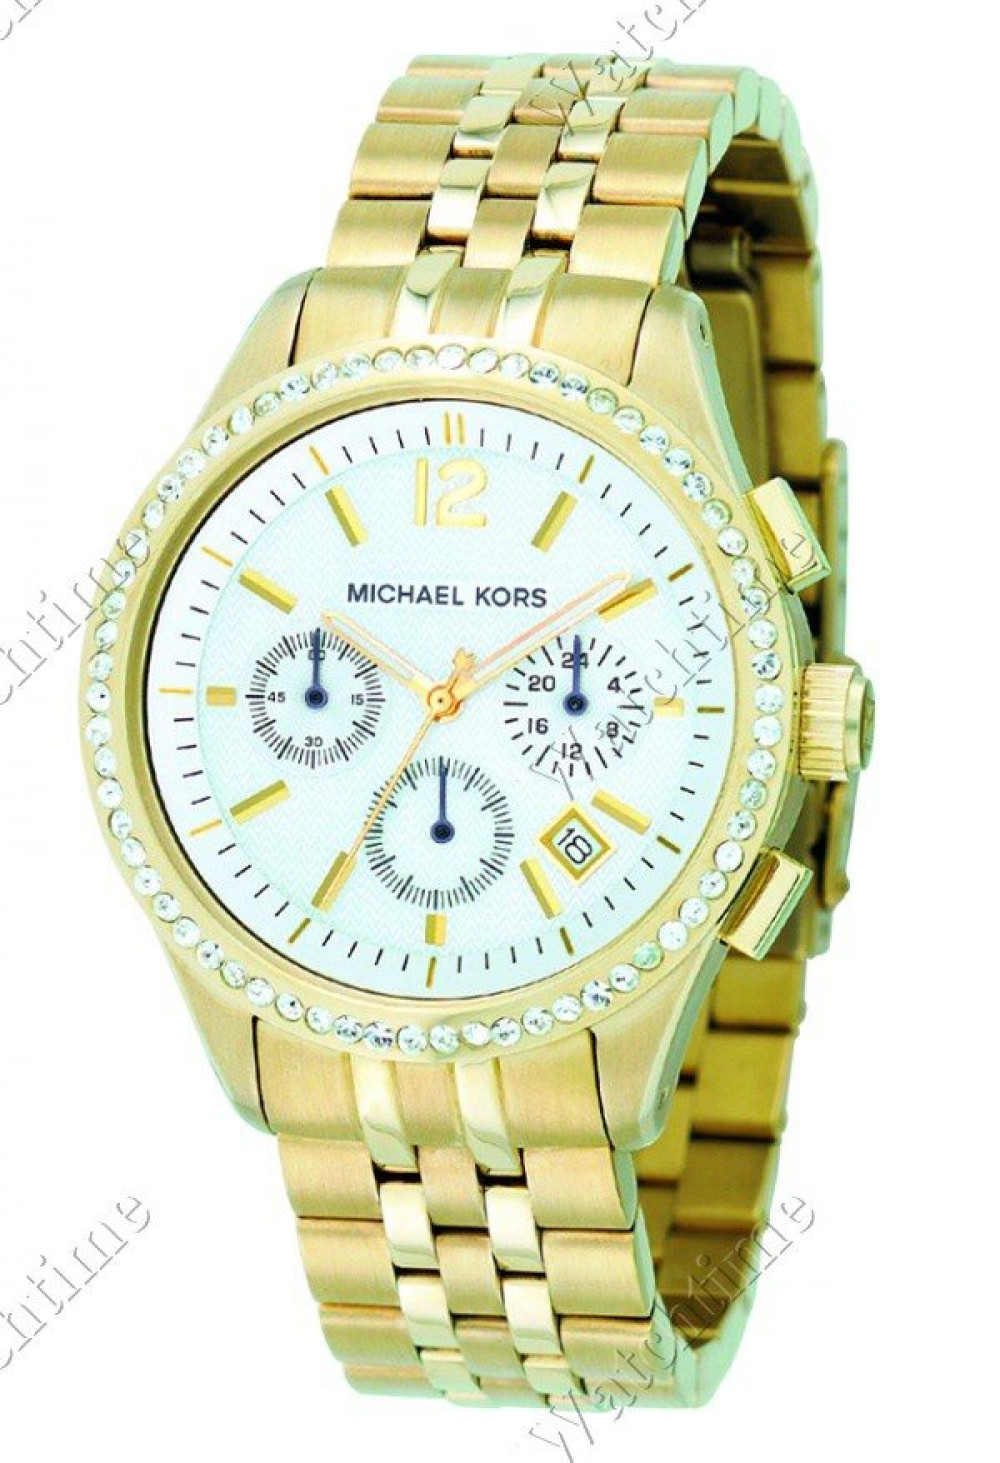 Zegarek firmy Michael Kors, model MK 5019